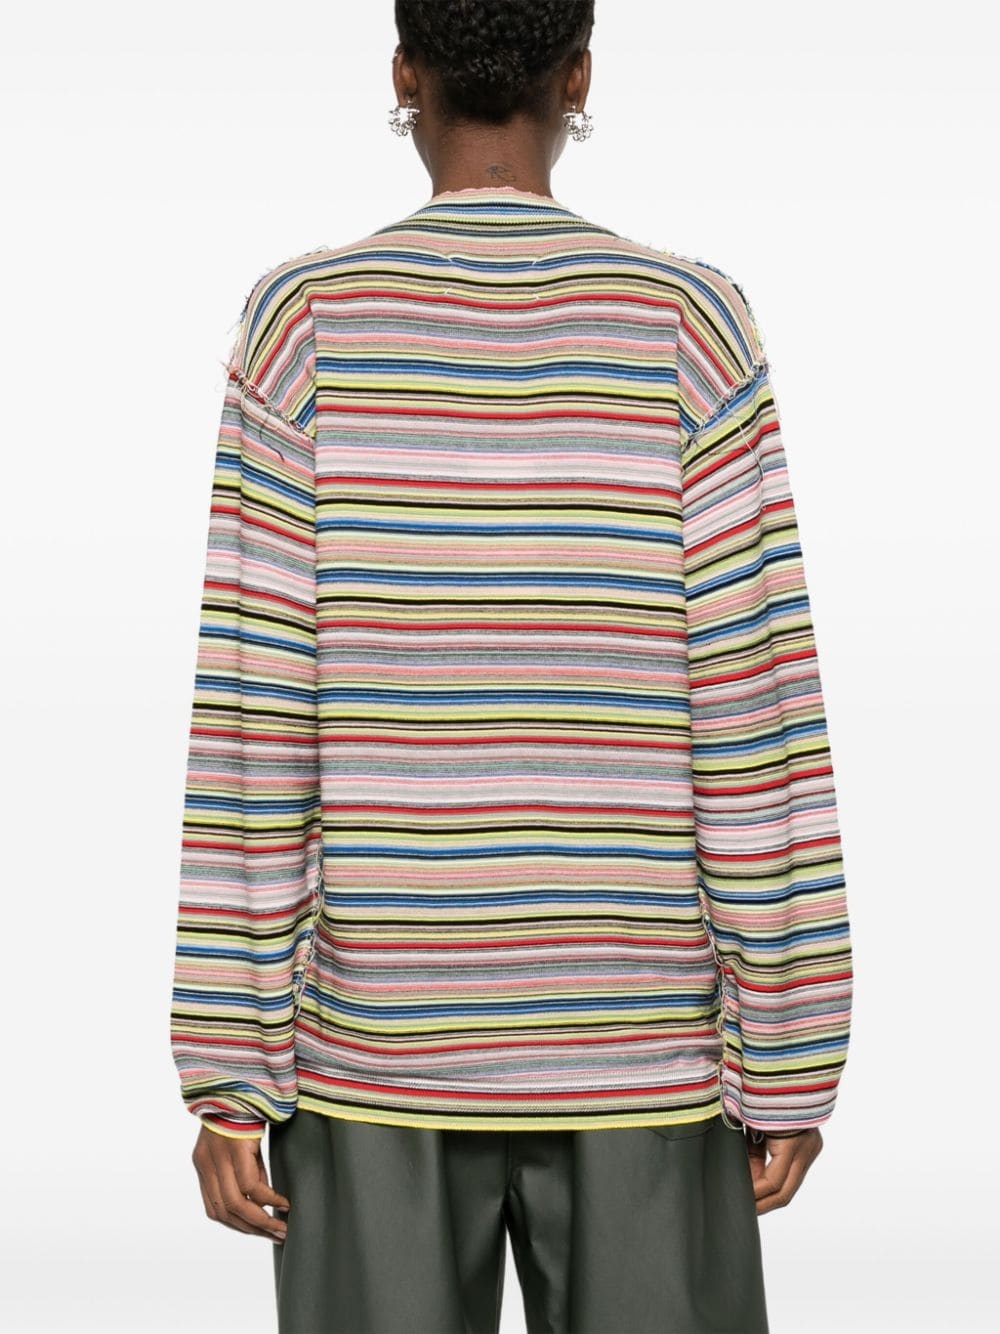 inside-out striped jumper - 4